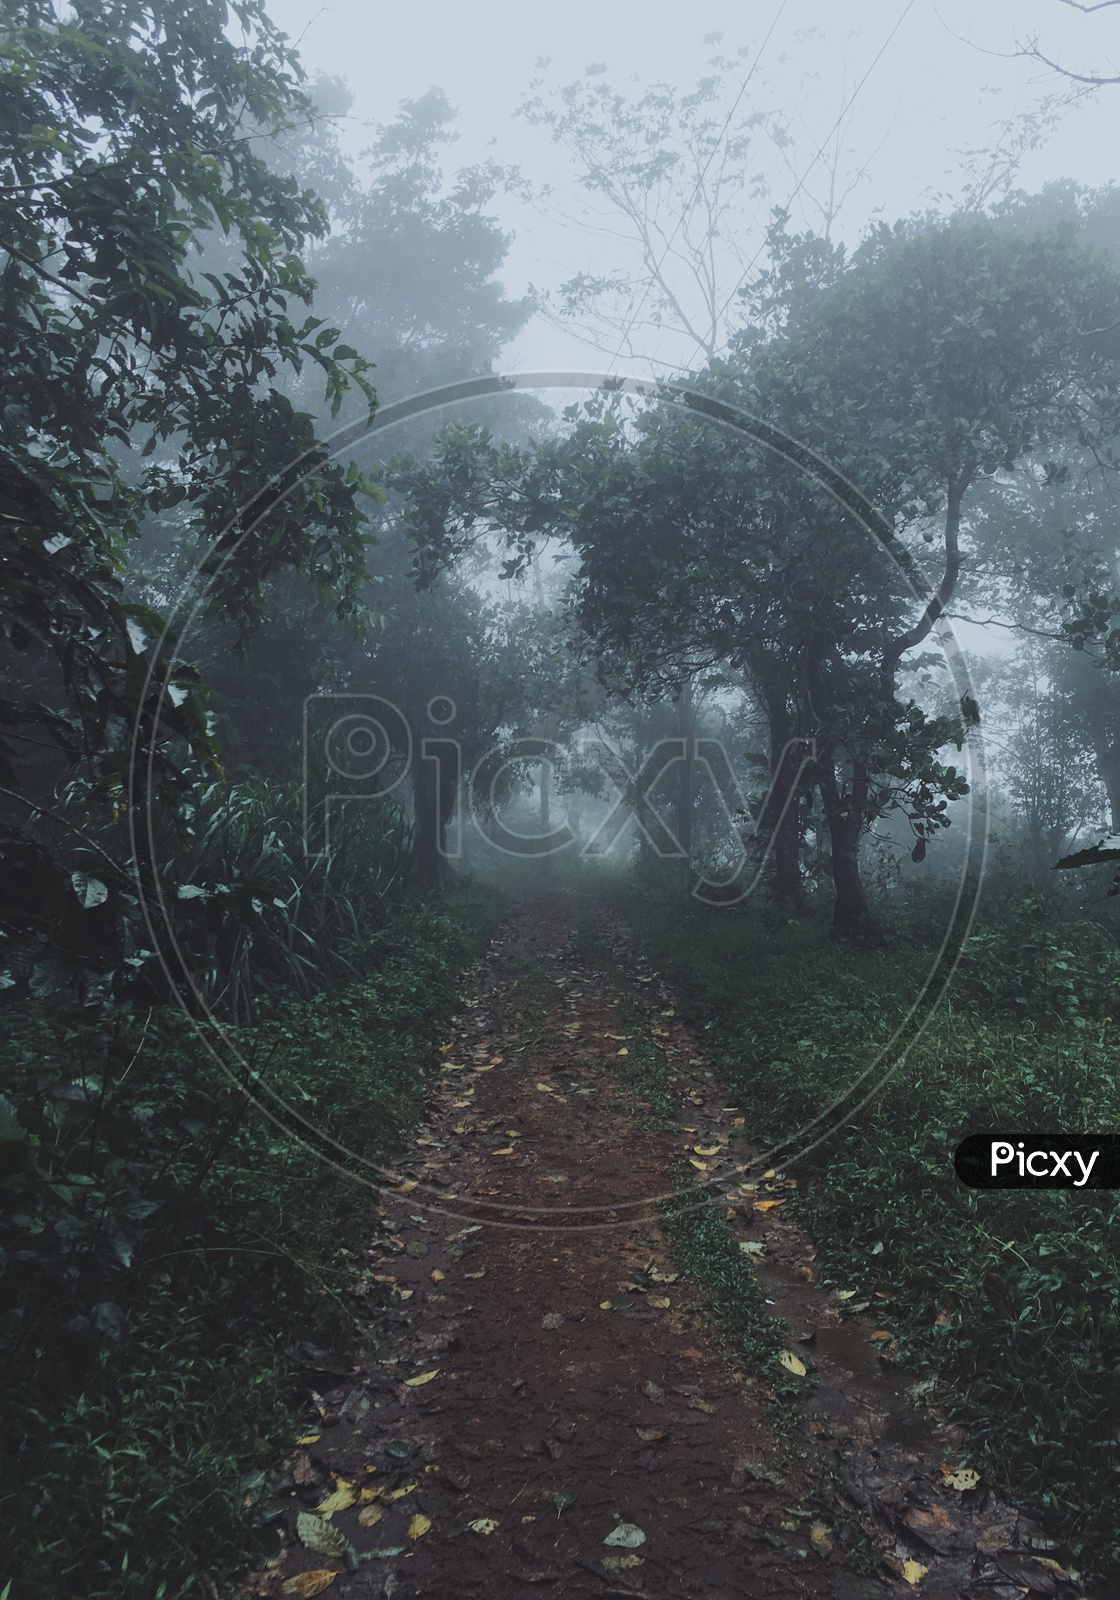 A path through the foggy forest